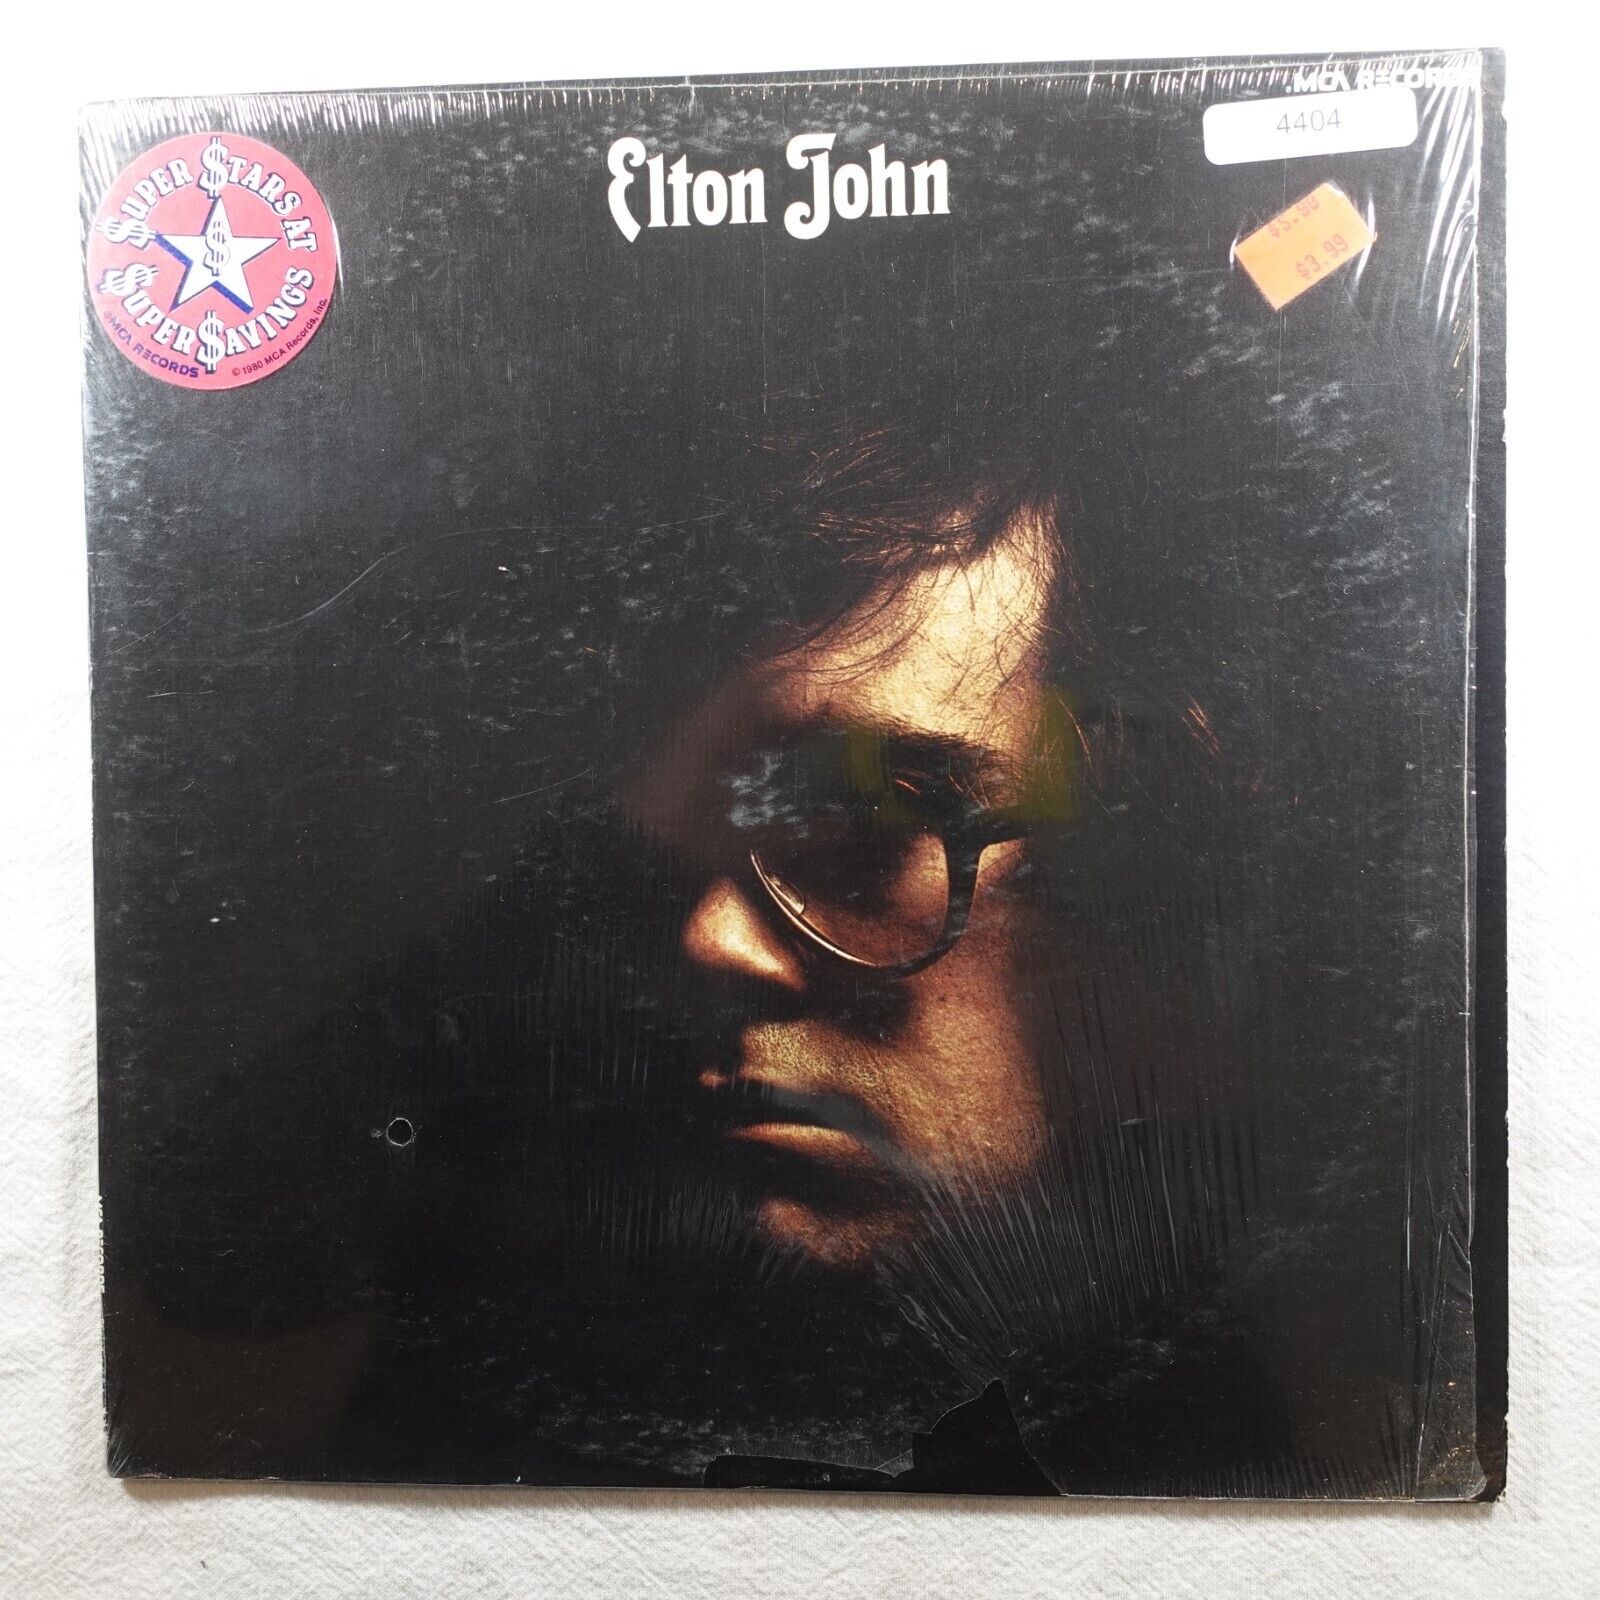 Elton John Self Titled Mca 37067 Record Album Vinyl LP